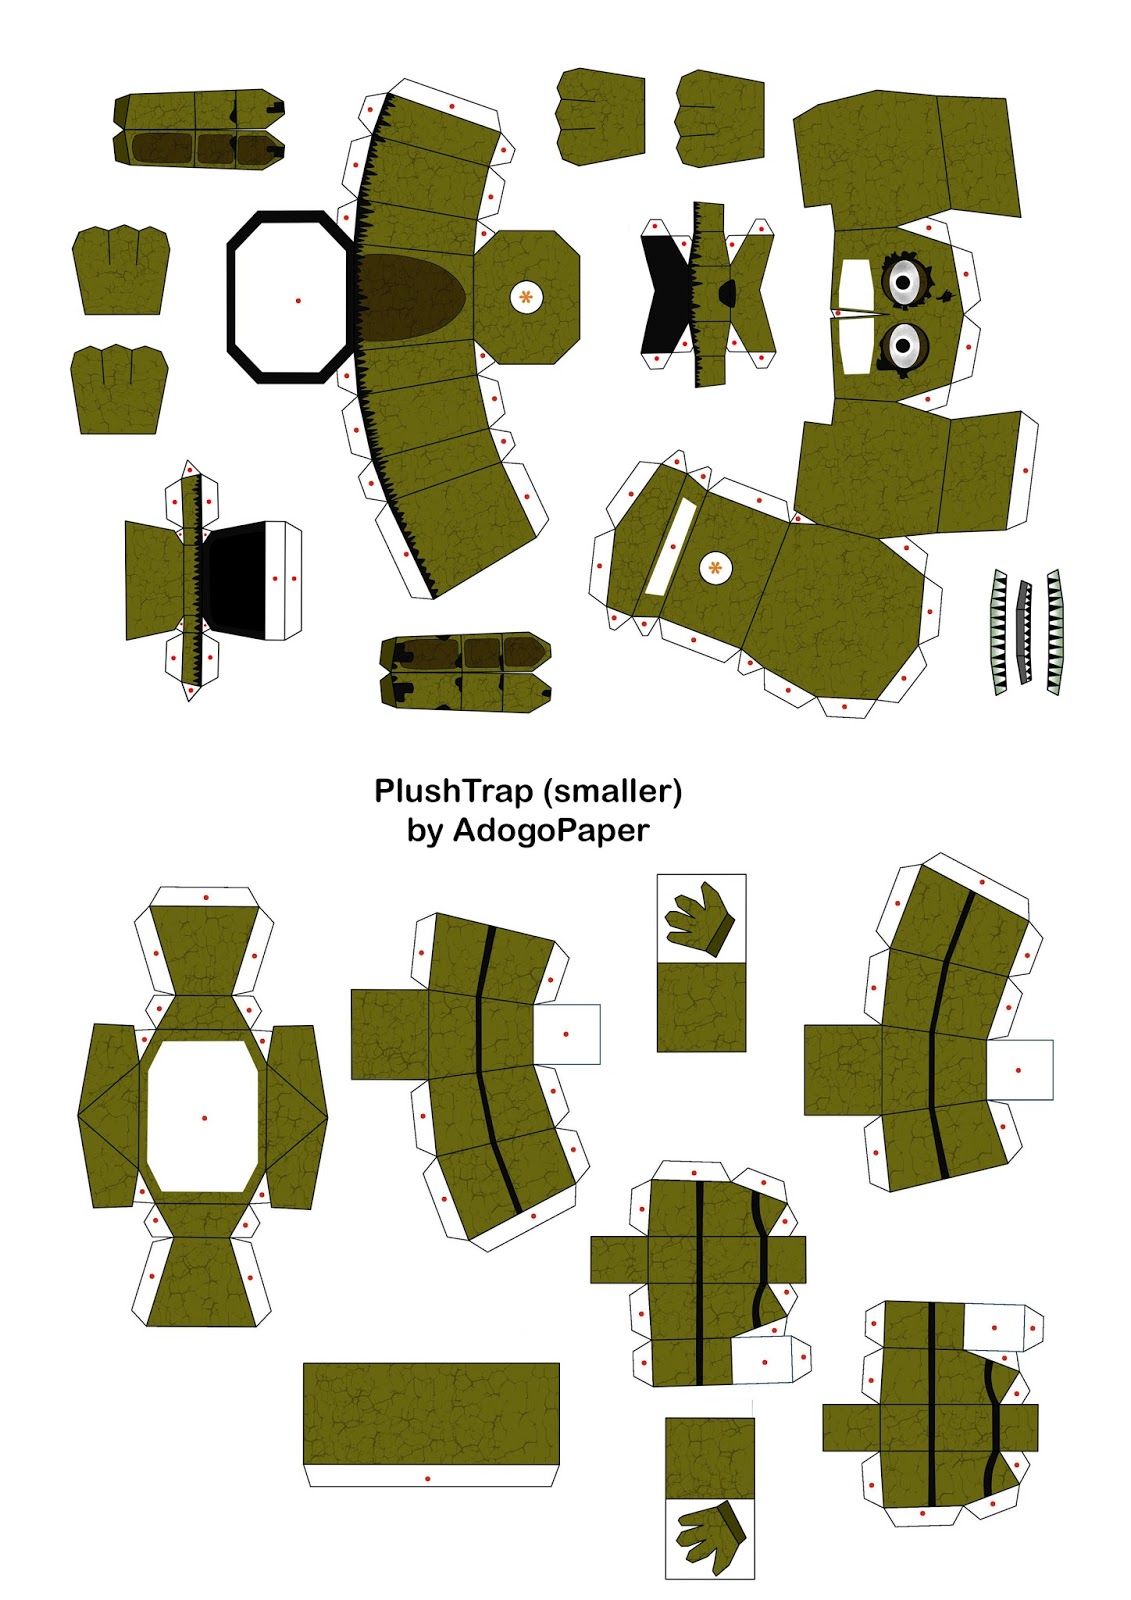 FNAF 3 phantom chica papercraft pt1 by Adogopaper on DeviantArt